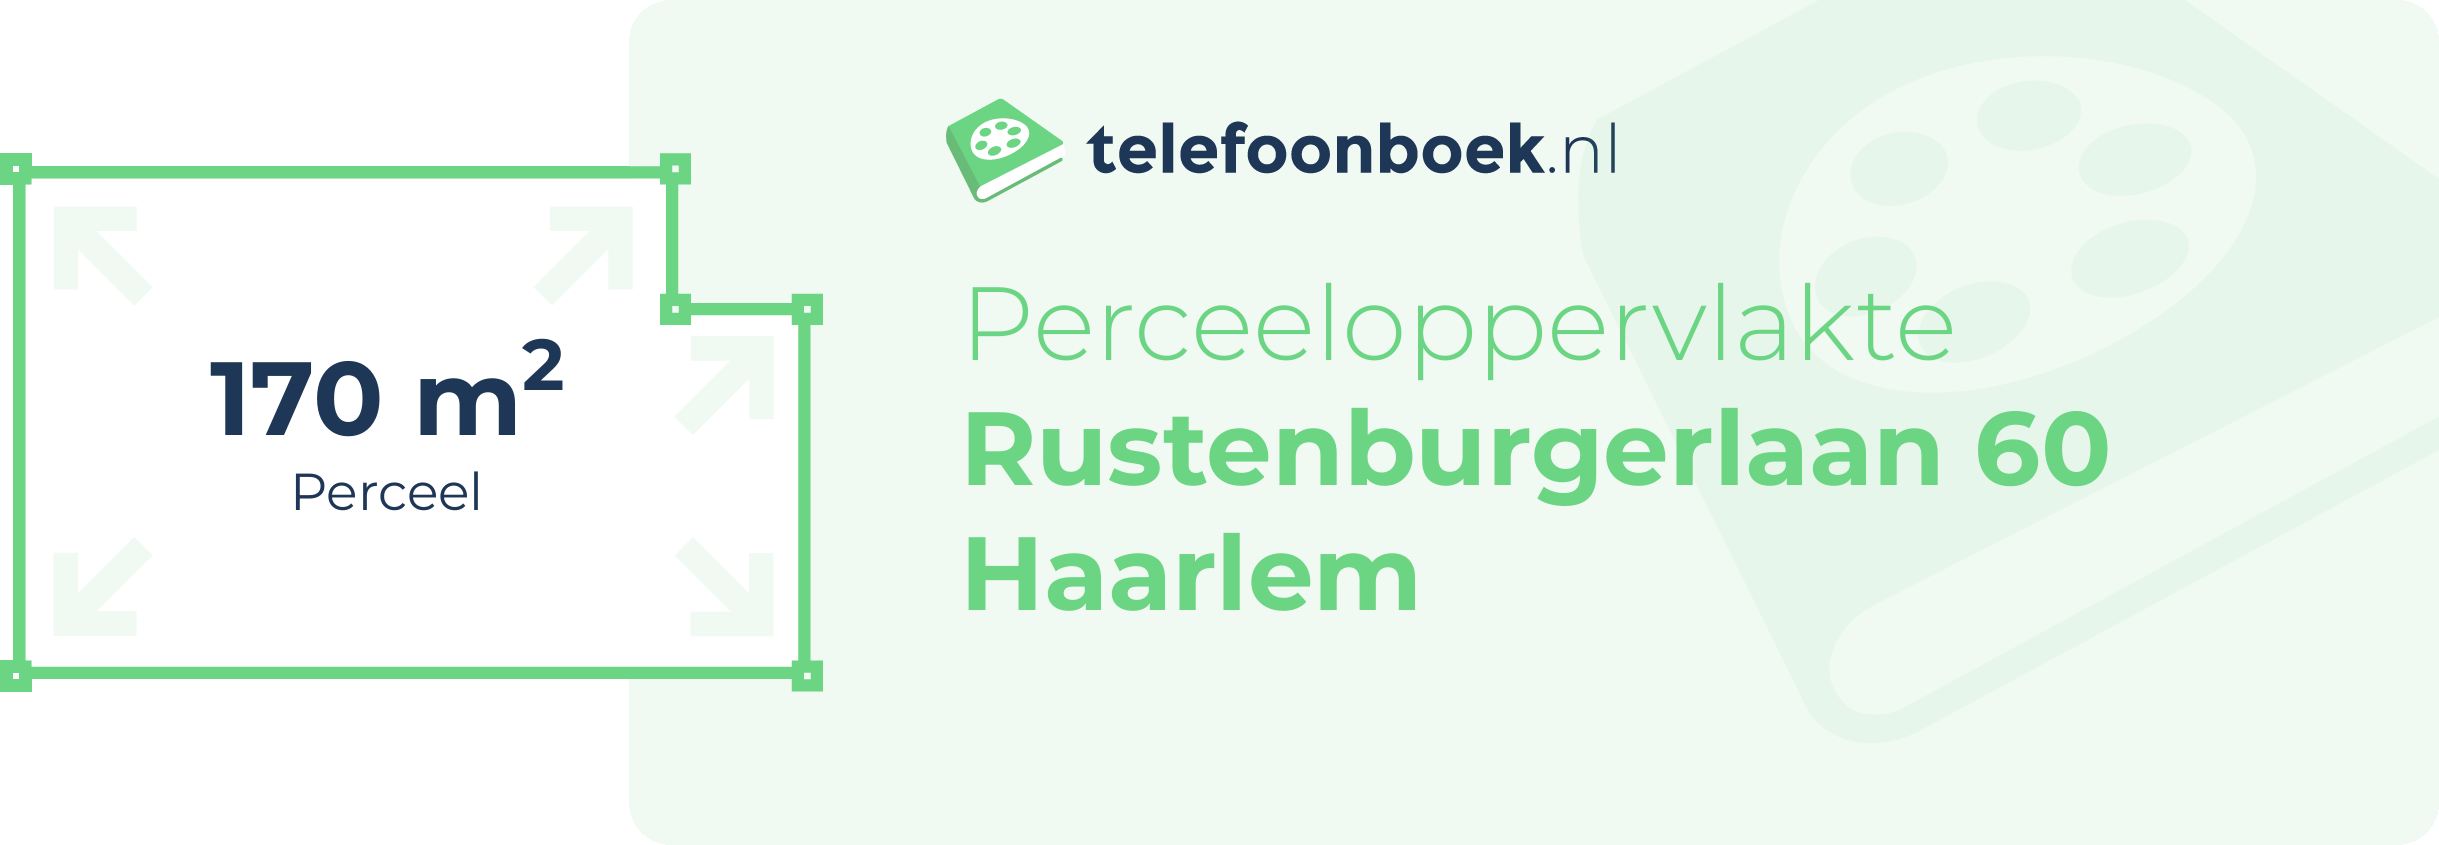 Perceeloppervlakte Rustenburgerlaan 60 Haarlem